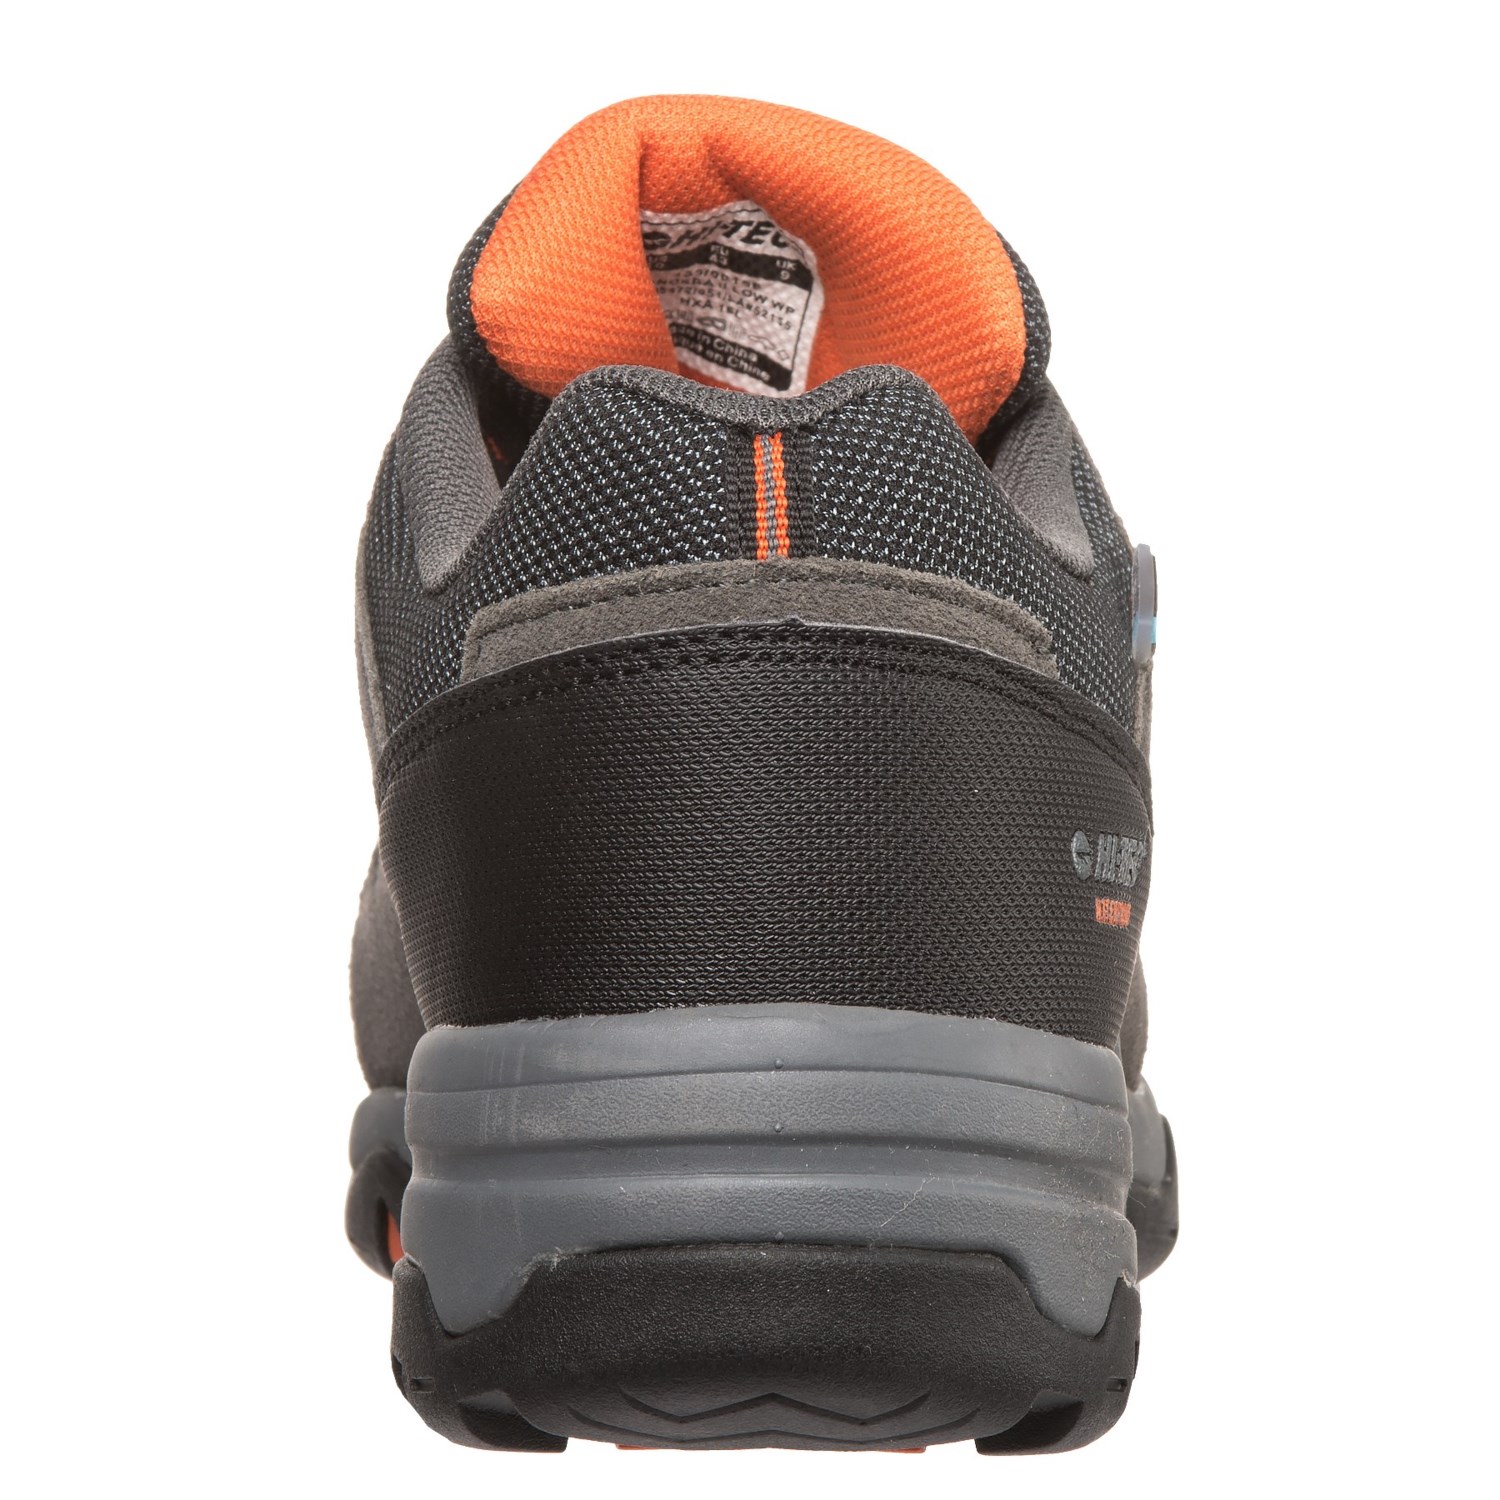 Hi-Tec Bandera II Low Hiking Shoes (For Men) - Save 42%